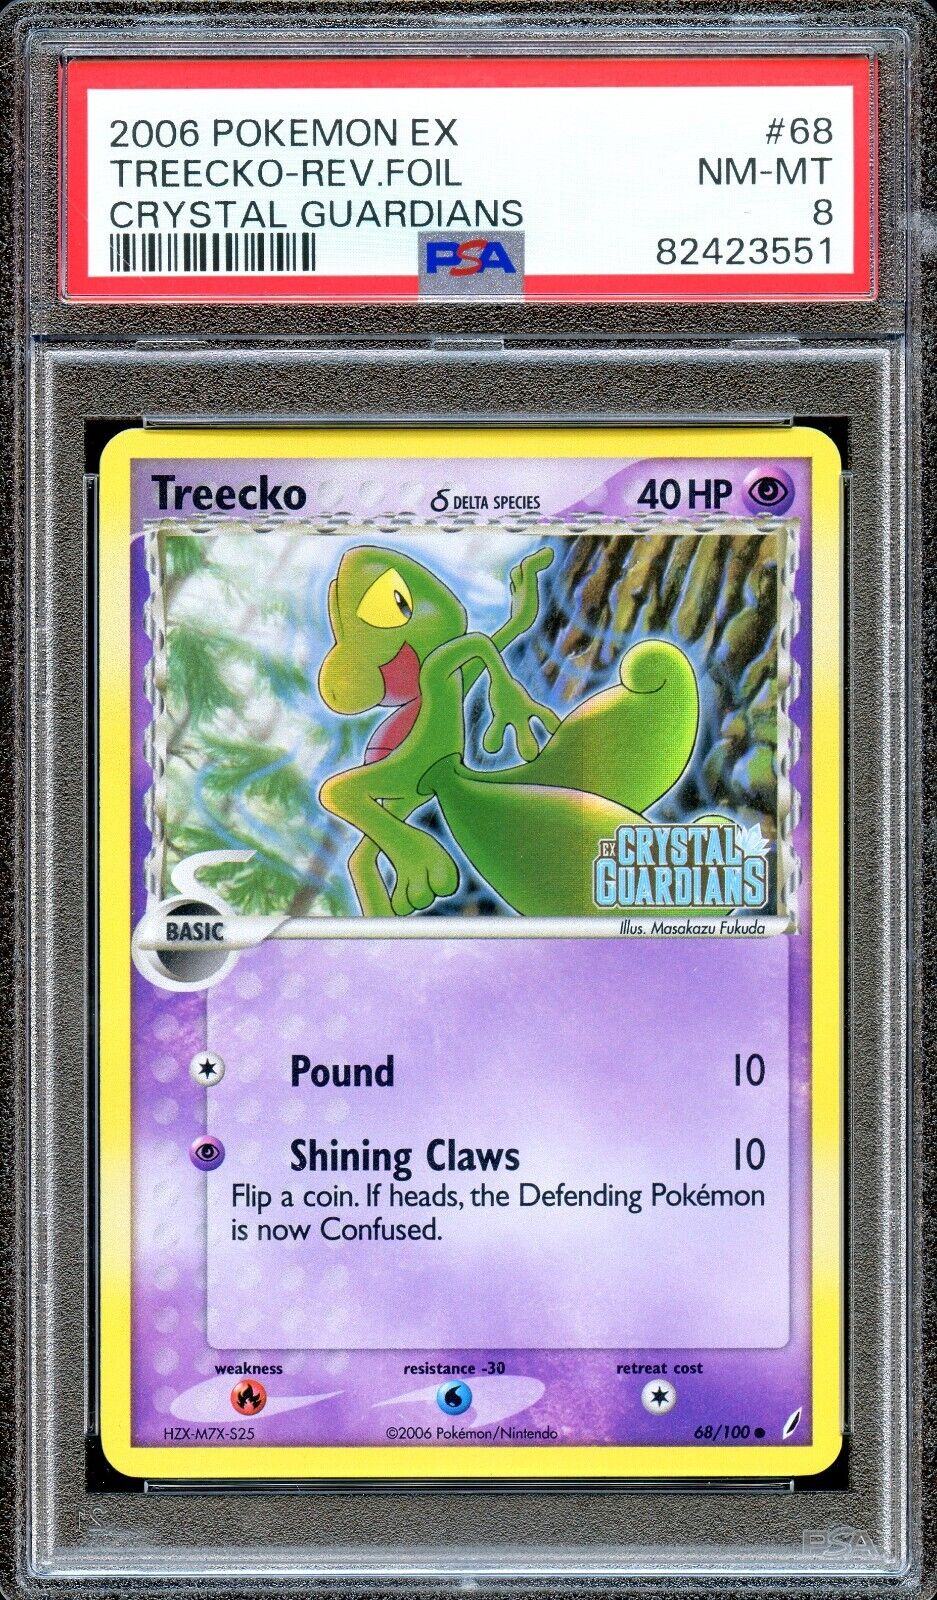 PSA 8 Treecko EX Reverse Foil Crystal Guardians 68/100 Pokemon Card NEAR MINT